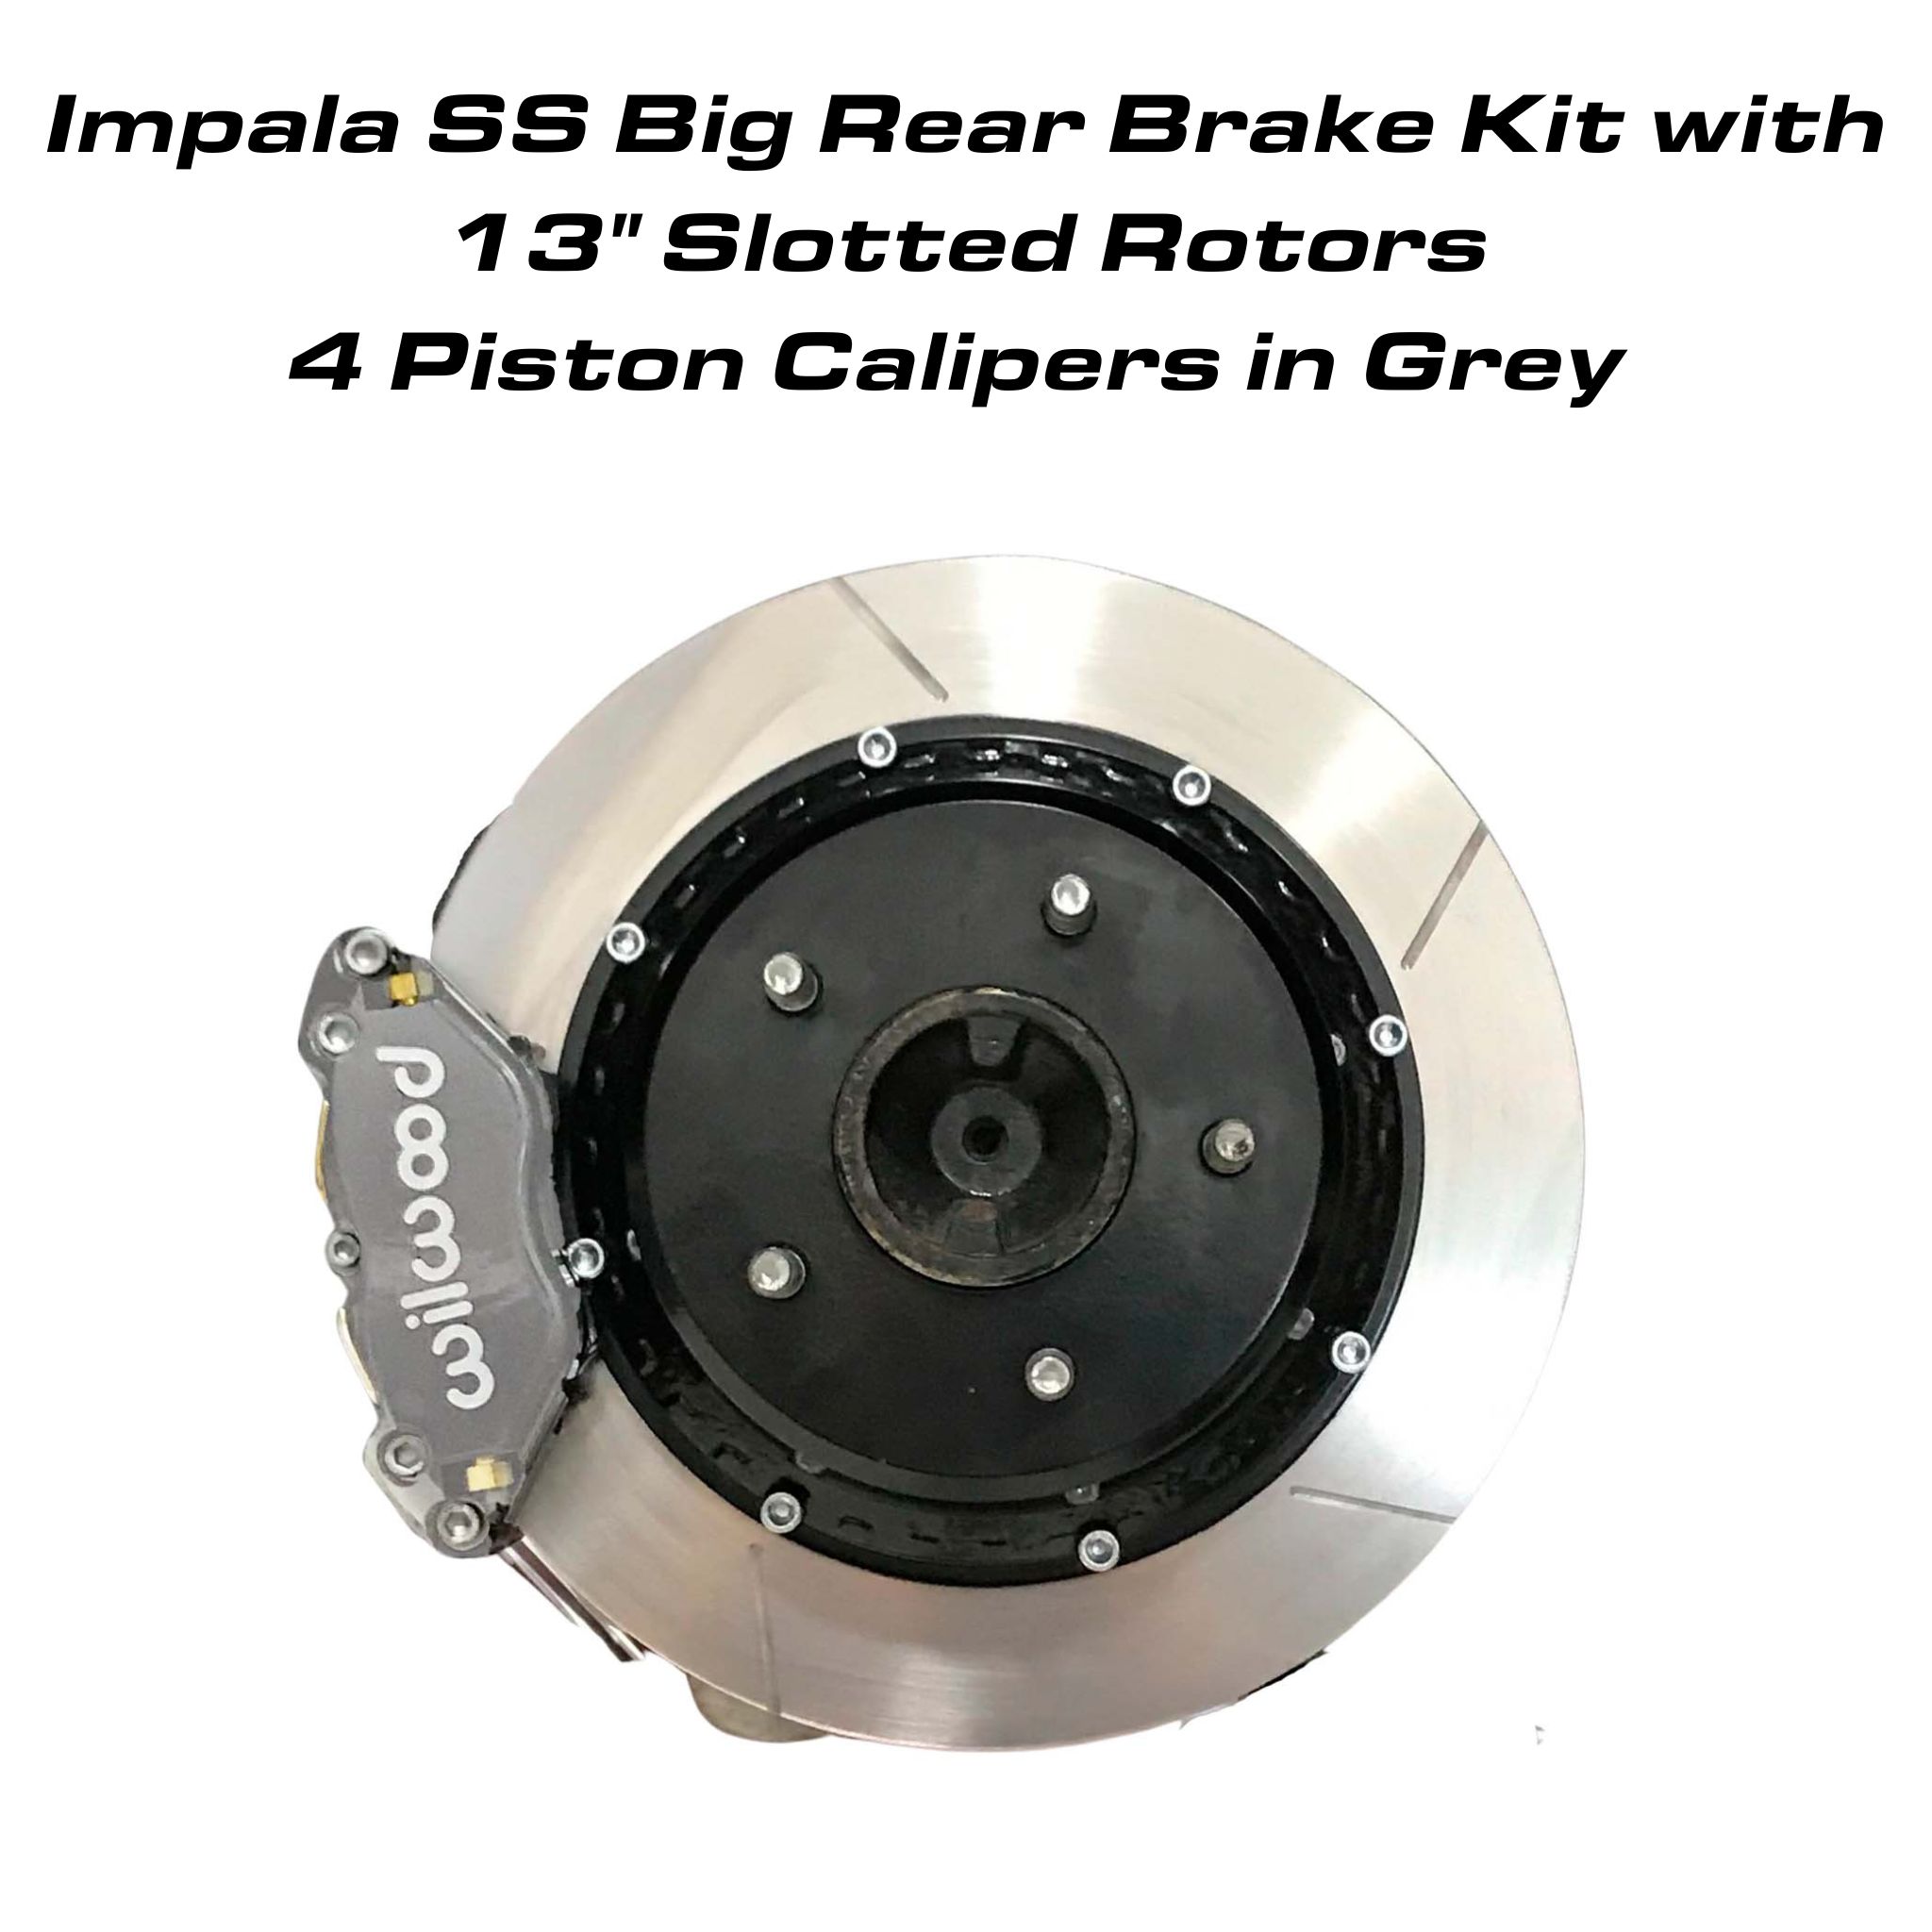 Impala SS Rear Big Brake Kit 13 Inch Slotted Rotors, Grey 4 Piston Calipers